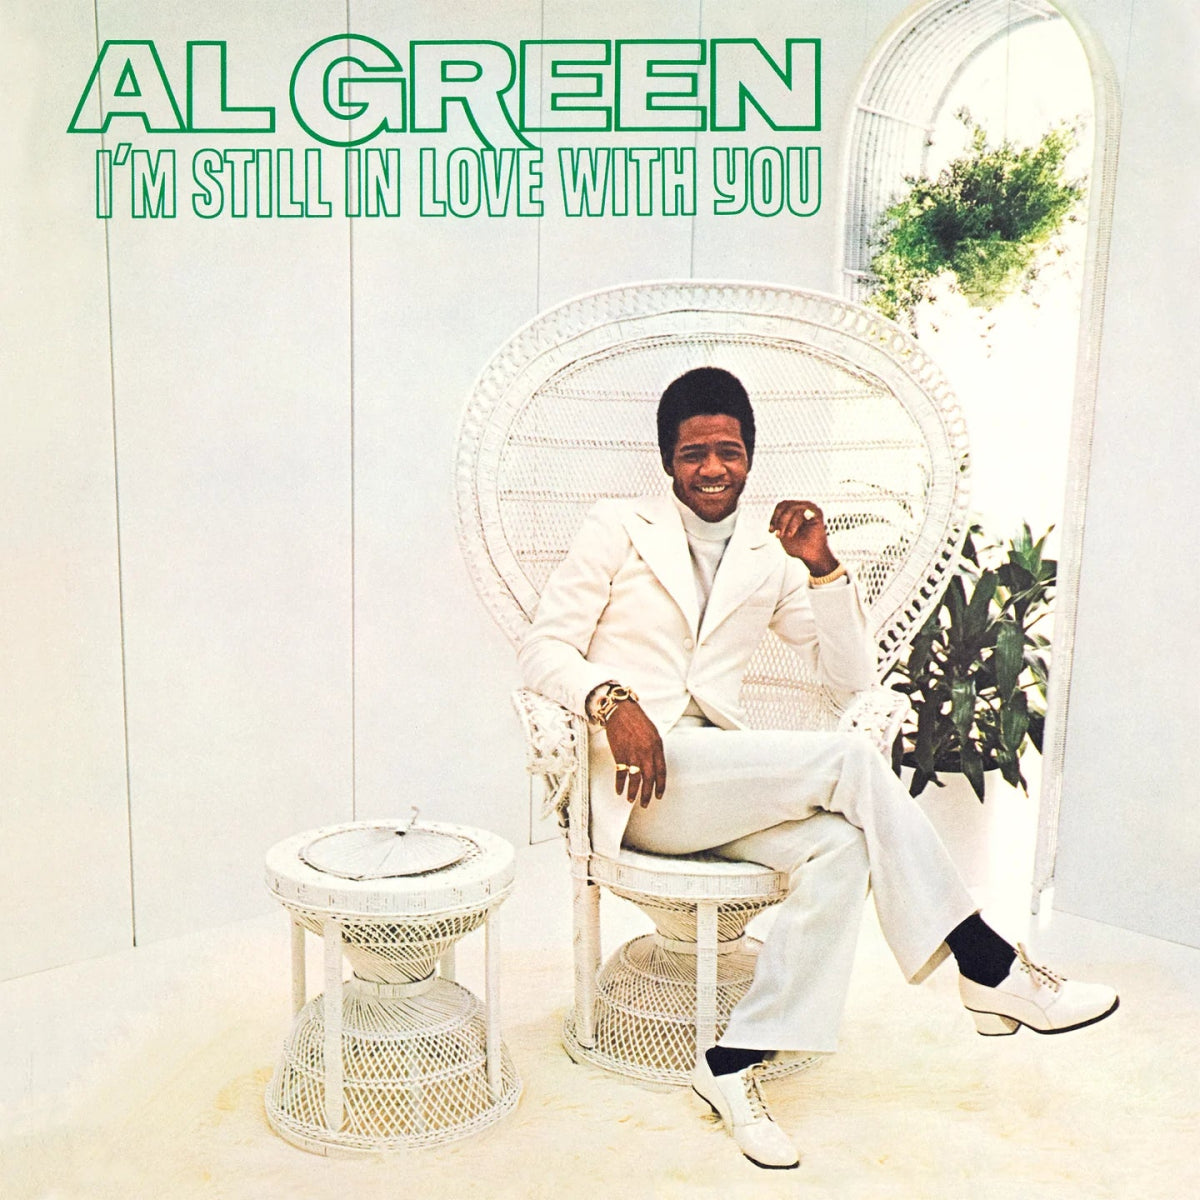 Al Green - I'm Still in Love with You - Green Smoke Color Vinyl Record - Indie Vinyl Den